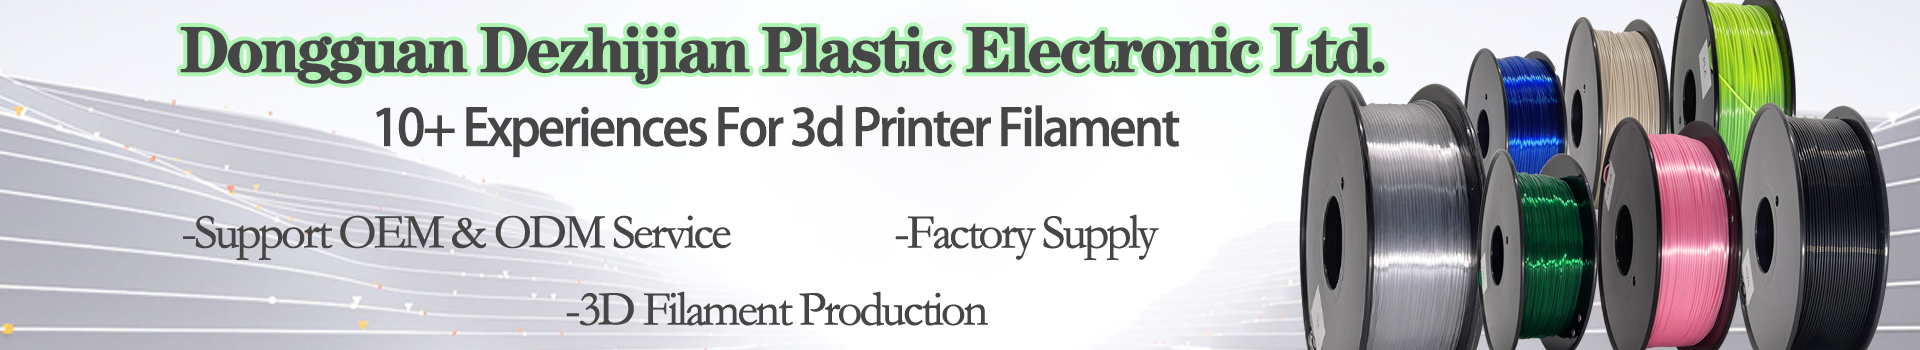 Pinrui 3D-skrivare 1,75 mm Silk Pla-filament för 3D-skrivare